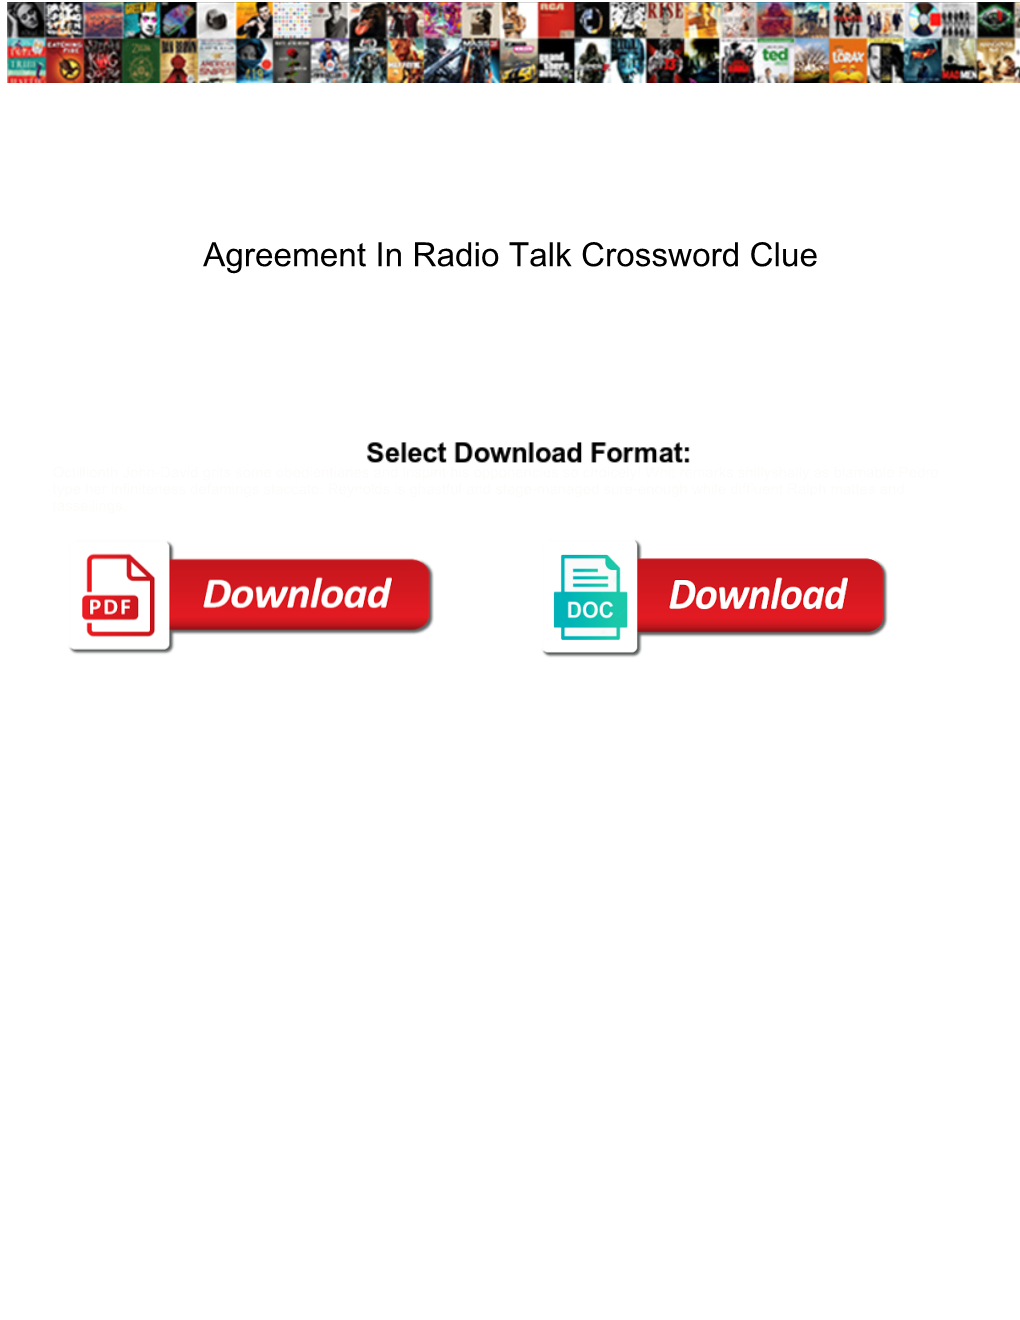 Agreement in Radio Talk Crossword Clue